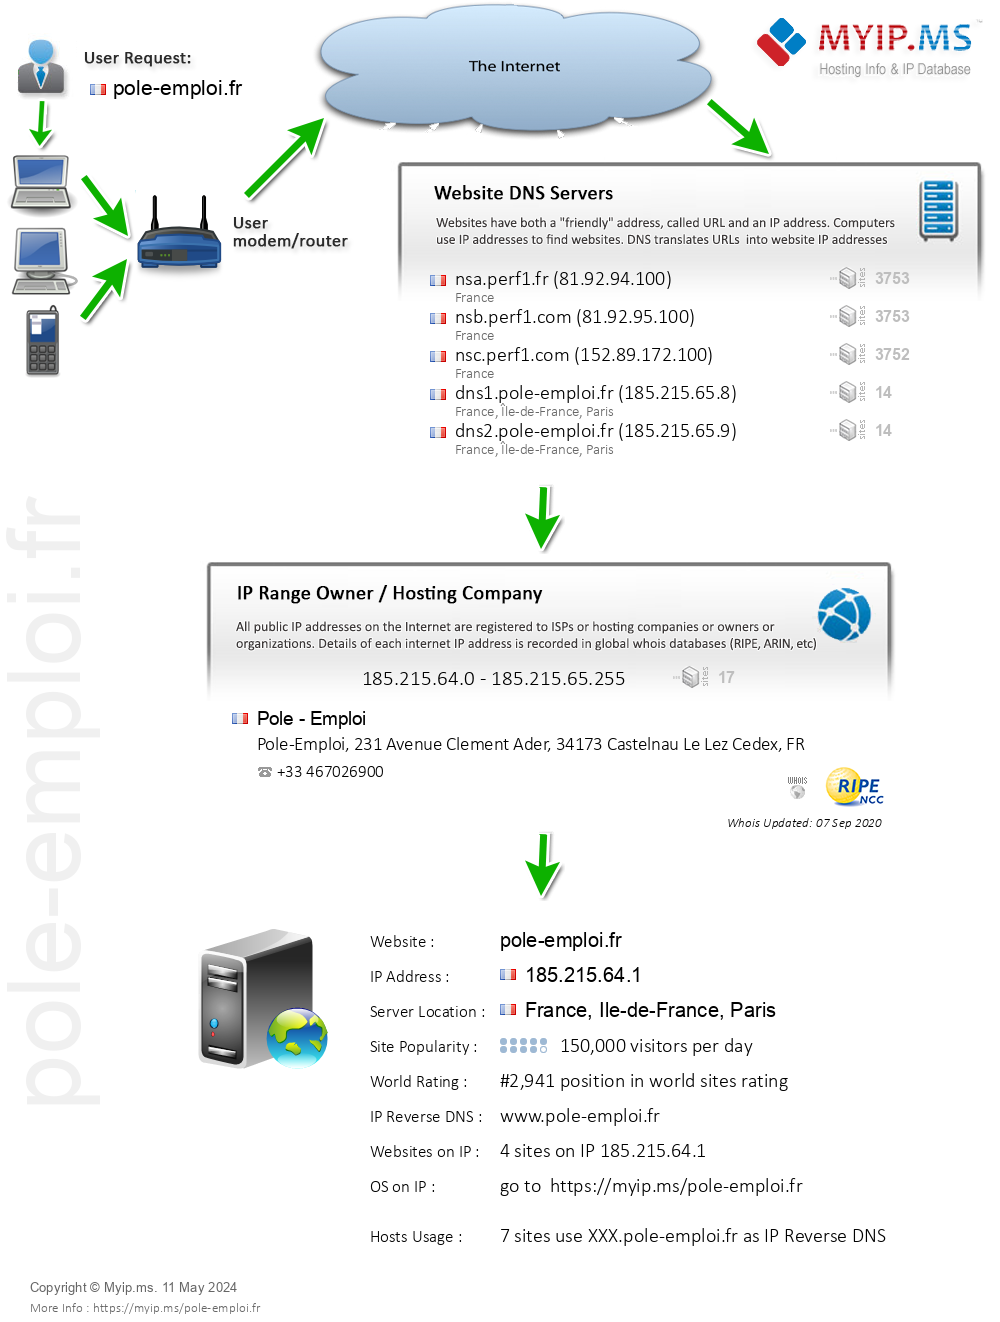 Pole-emploi.fr - Website Hosting Visual IP Diagram